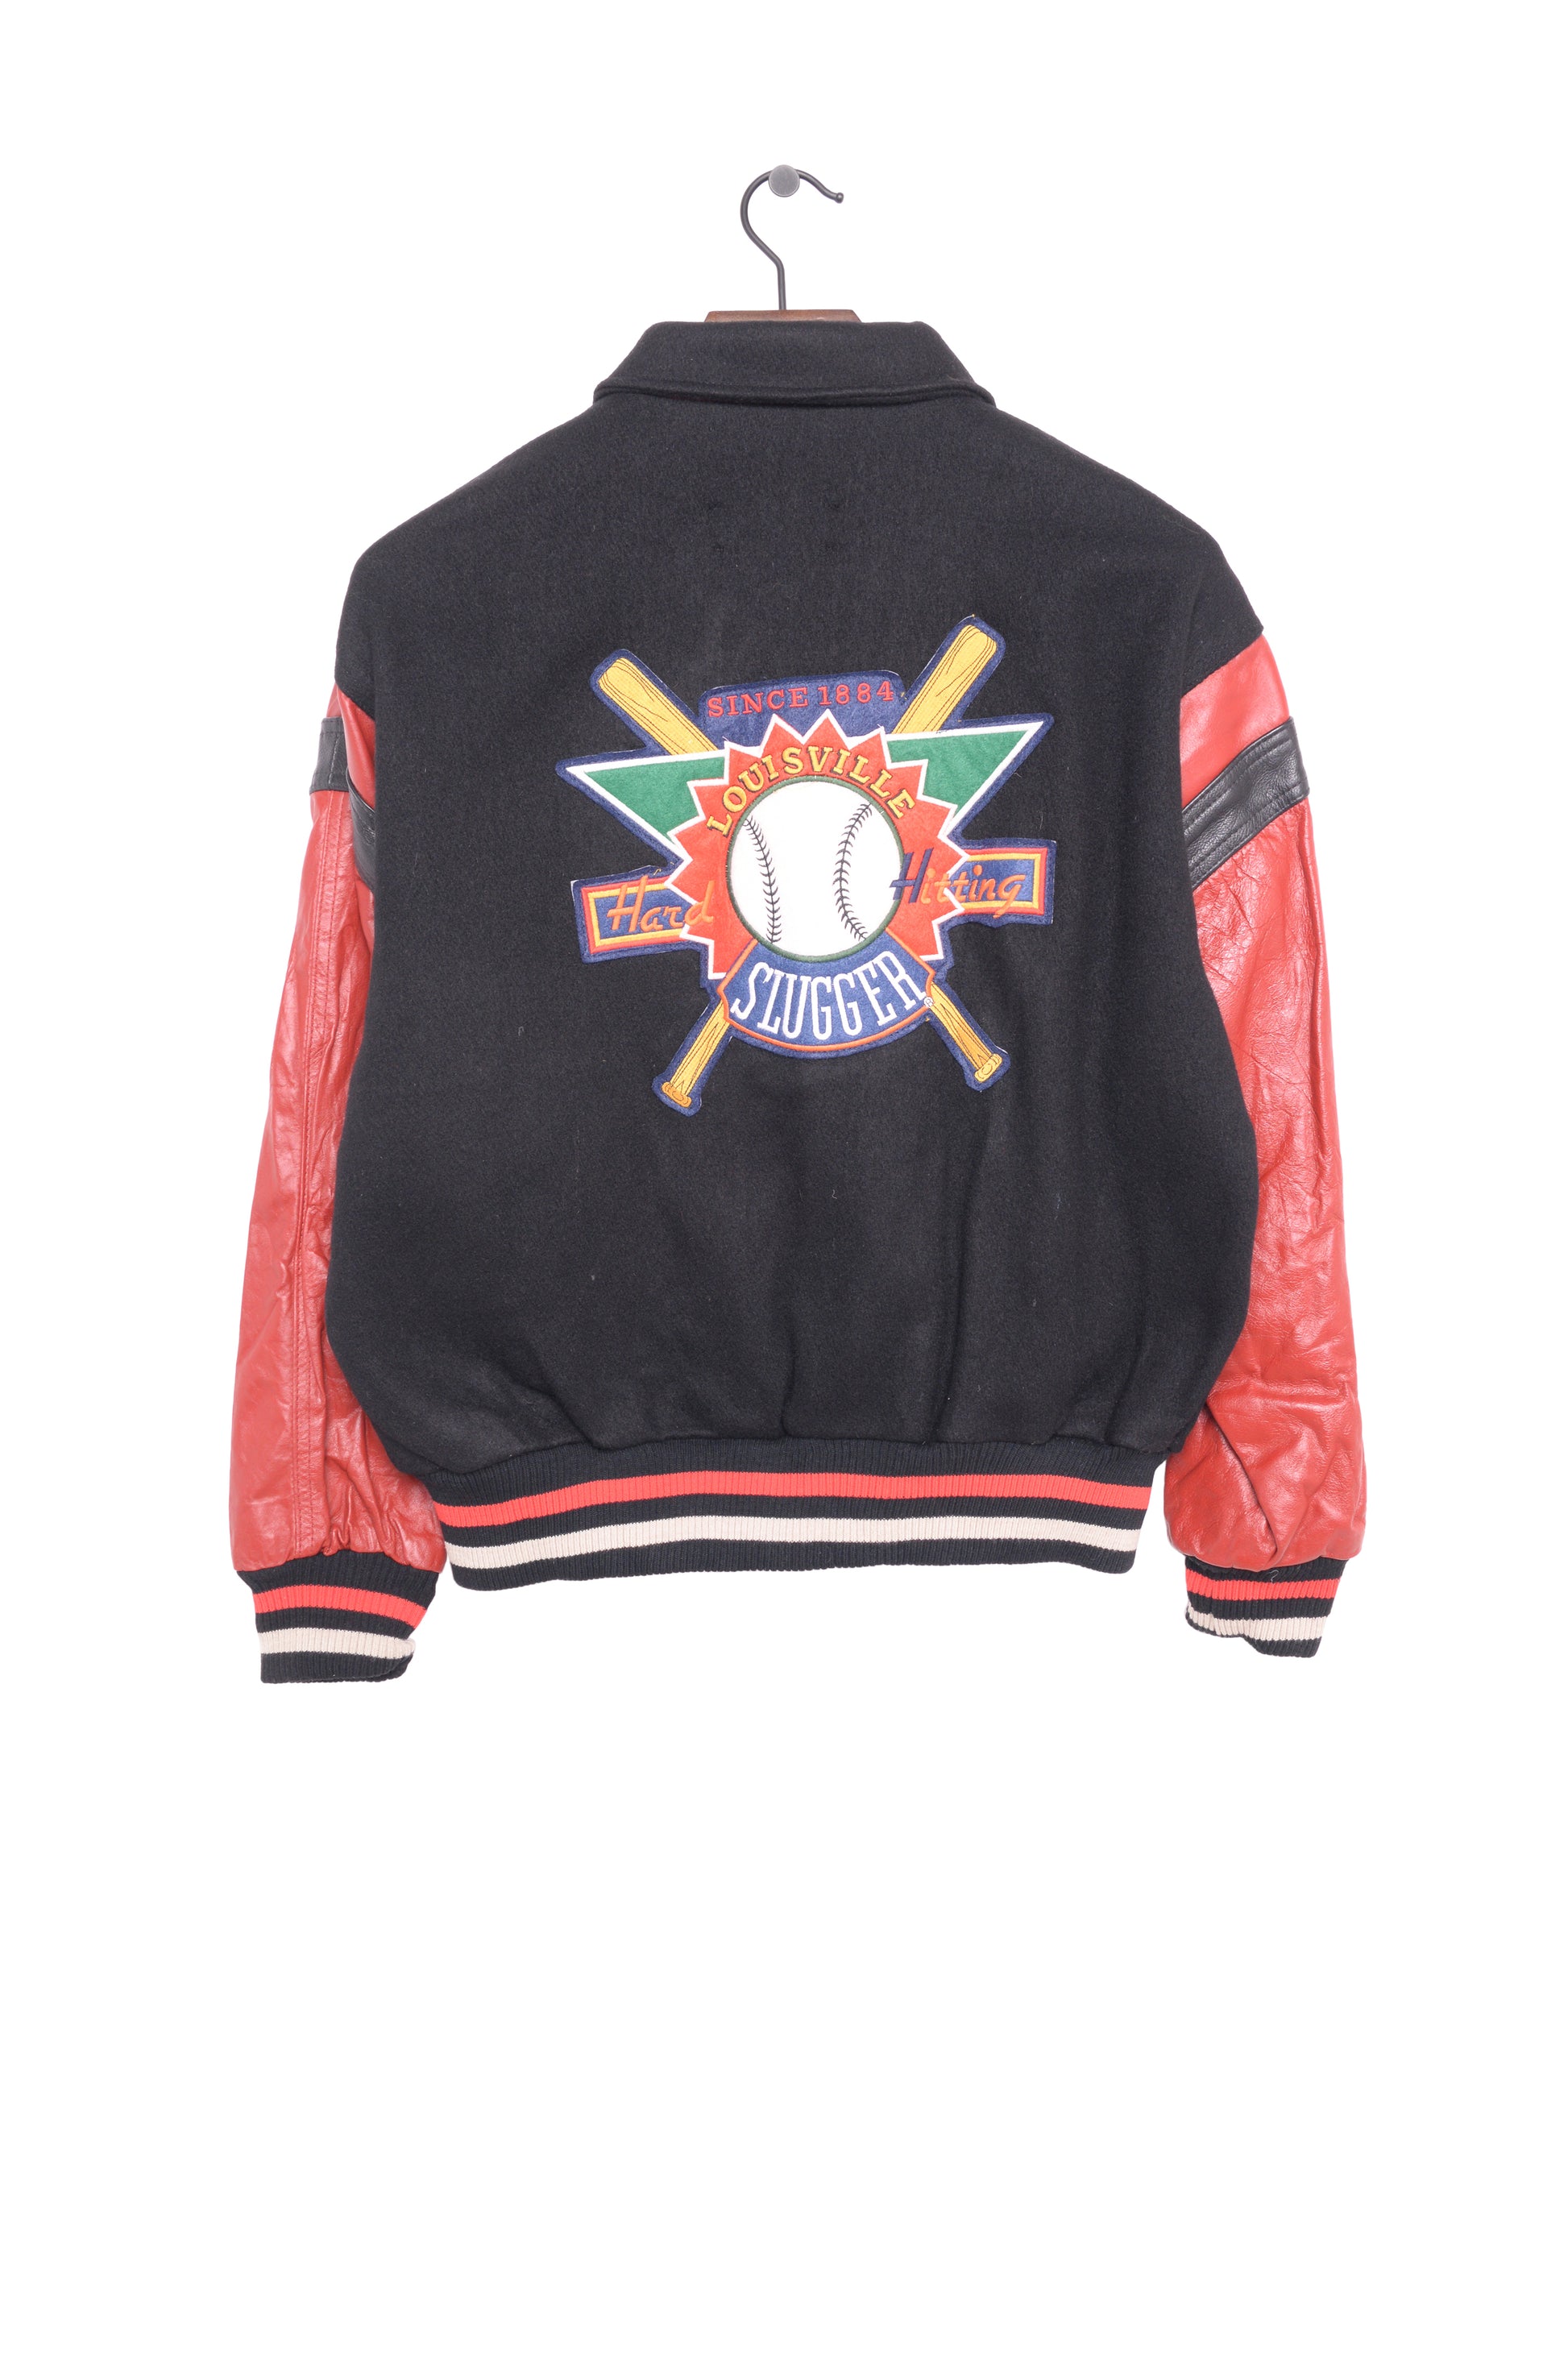 NWT Vintage Louisville Slugger Baseball Jacket M/L USA Deadstock Varsity  Sports